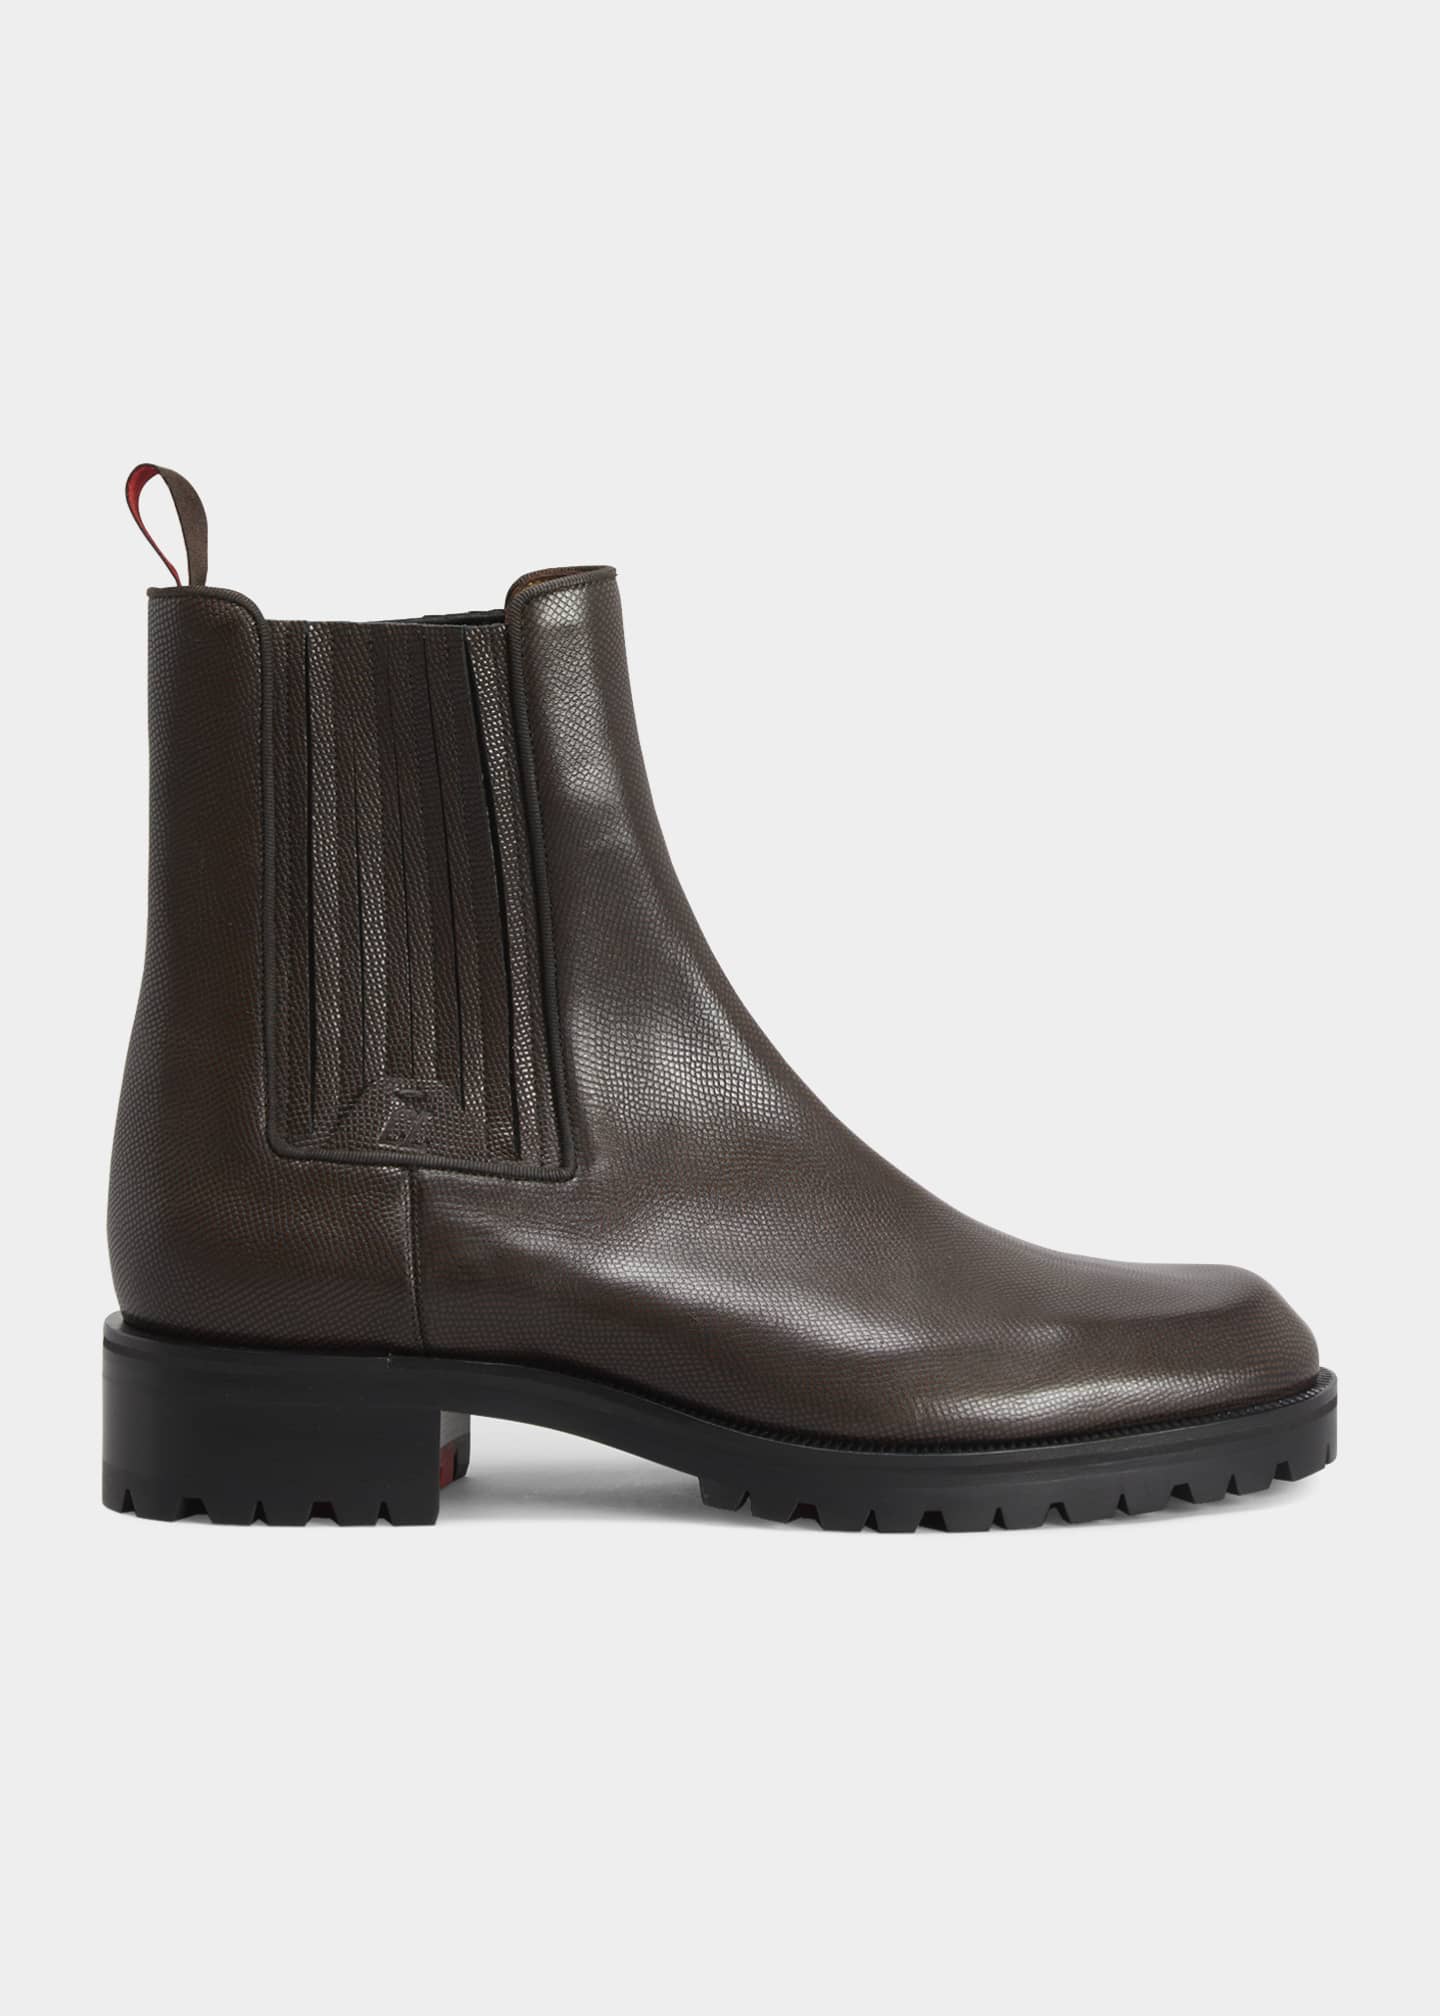 General It merge Christian Louboutin Men's Motok Leather Ankle Boots - Bergdorf Goodman